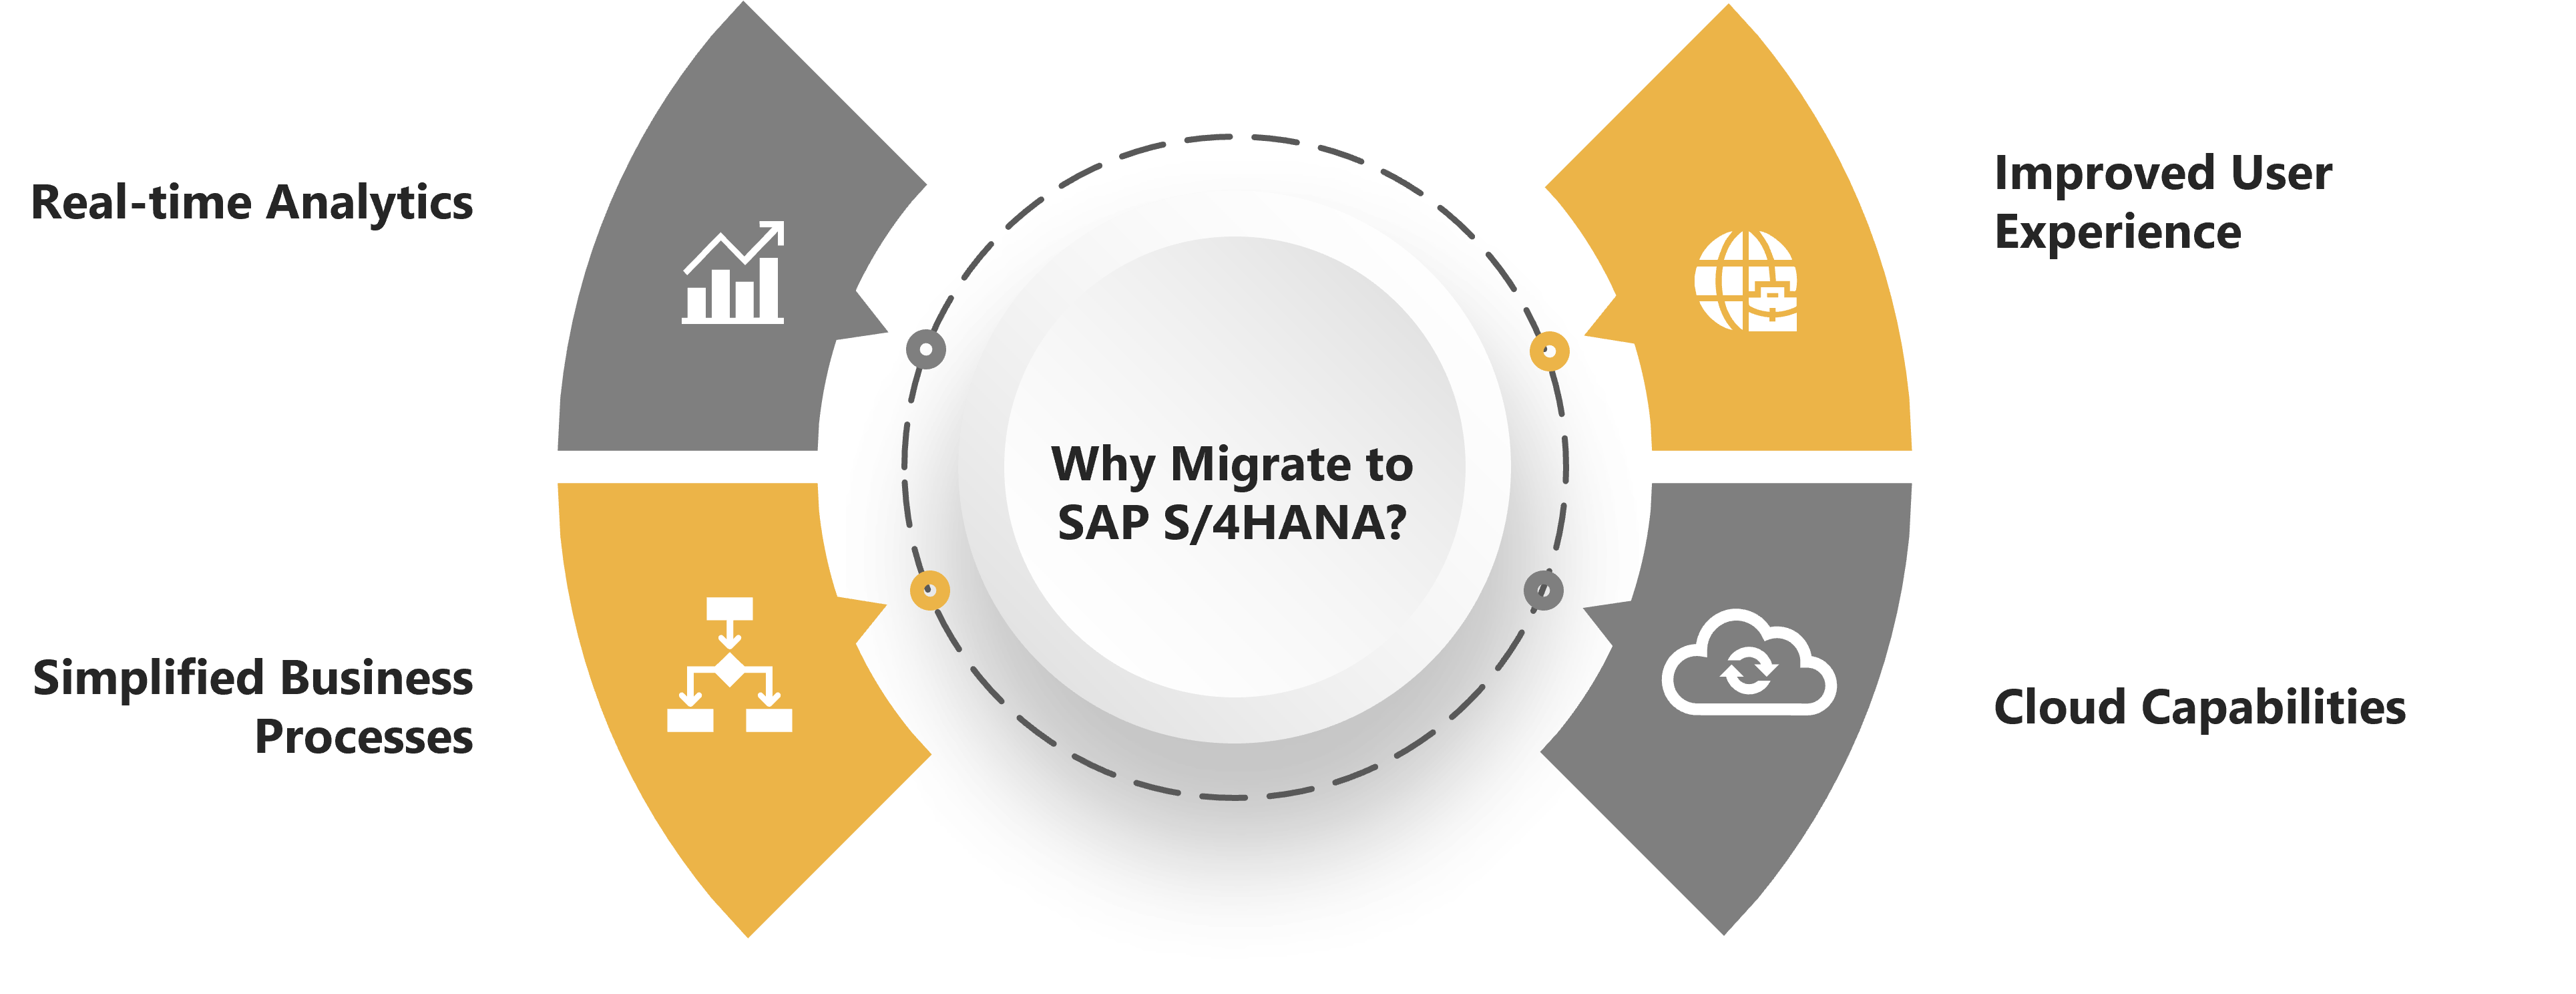 Why migrate to SAP S/4HANA?